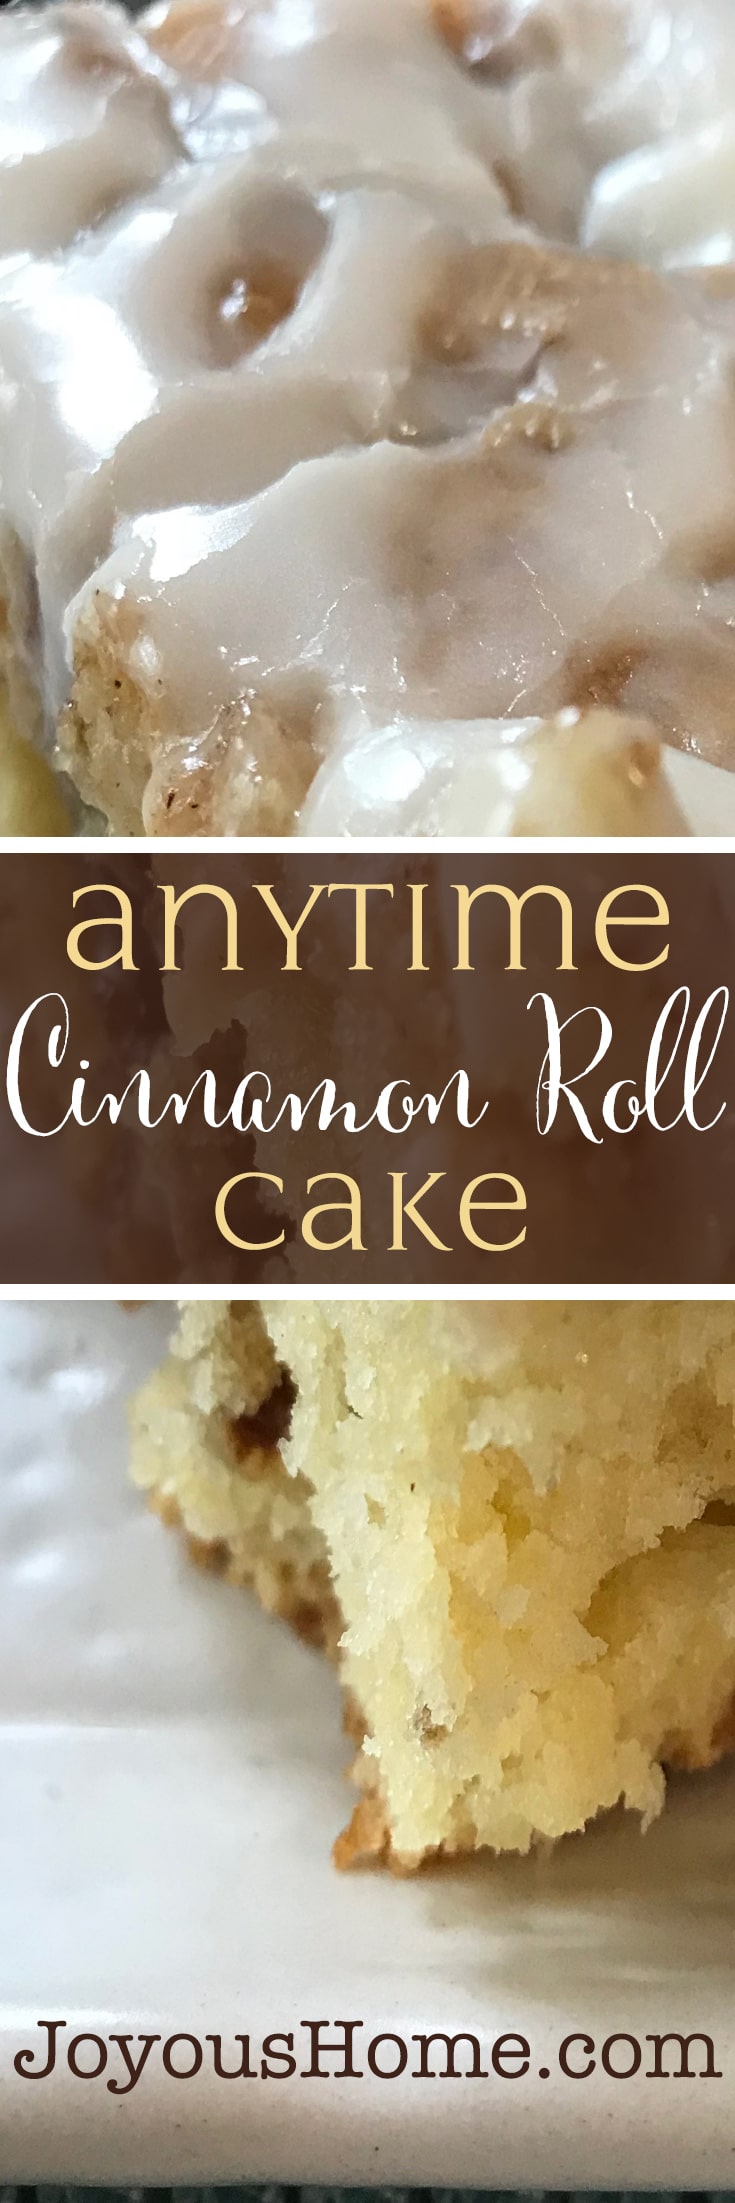 Anytime Cinnamon Roll Cake